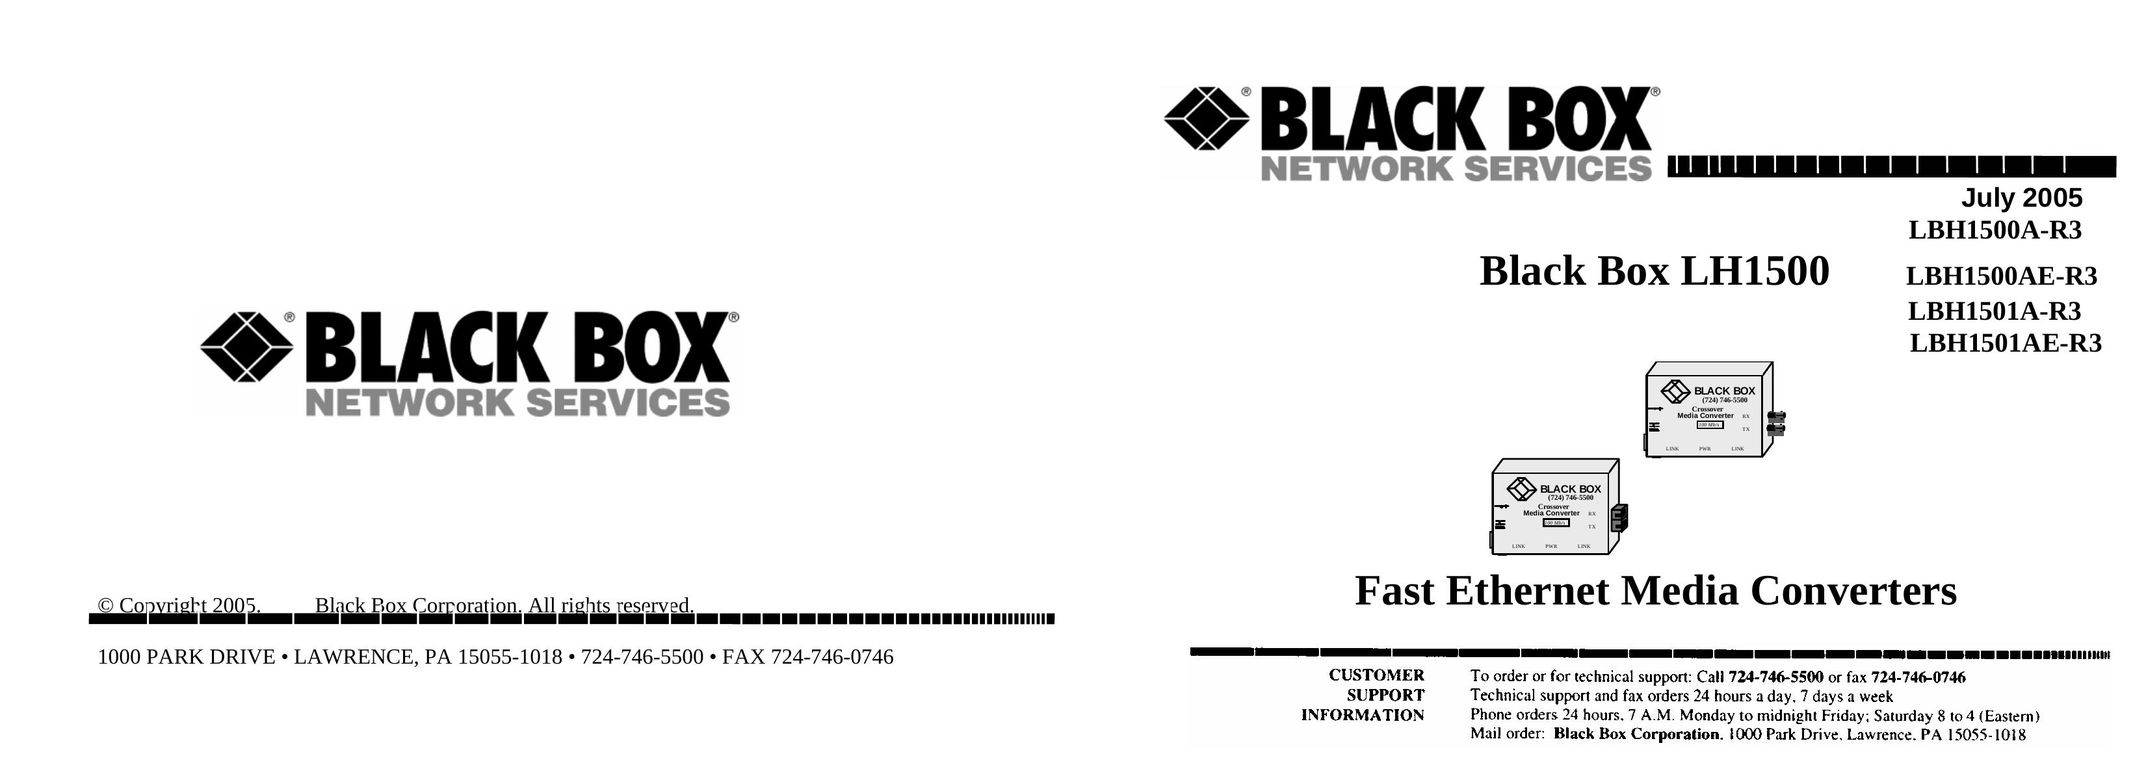 Black Box LBH1500A Network Card User Manual